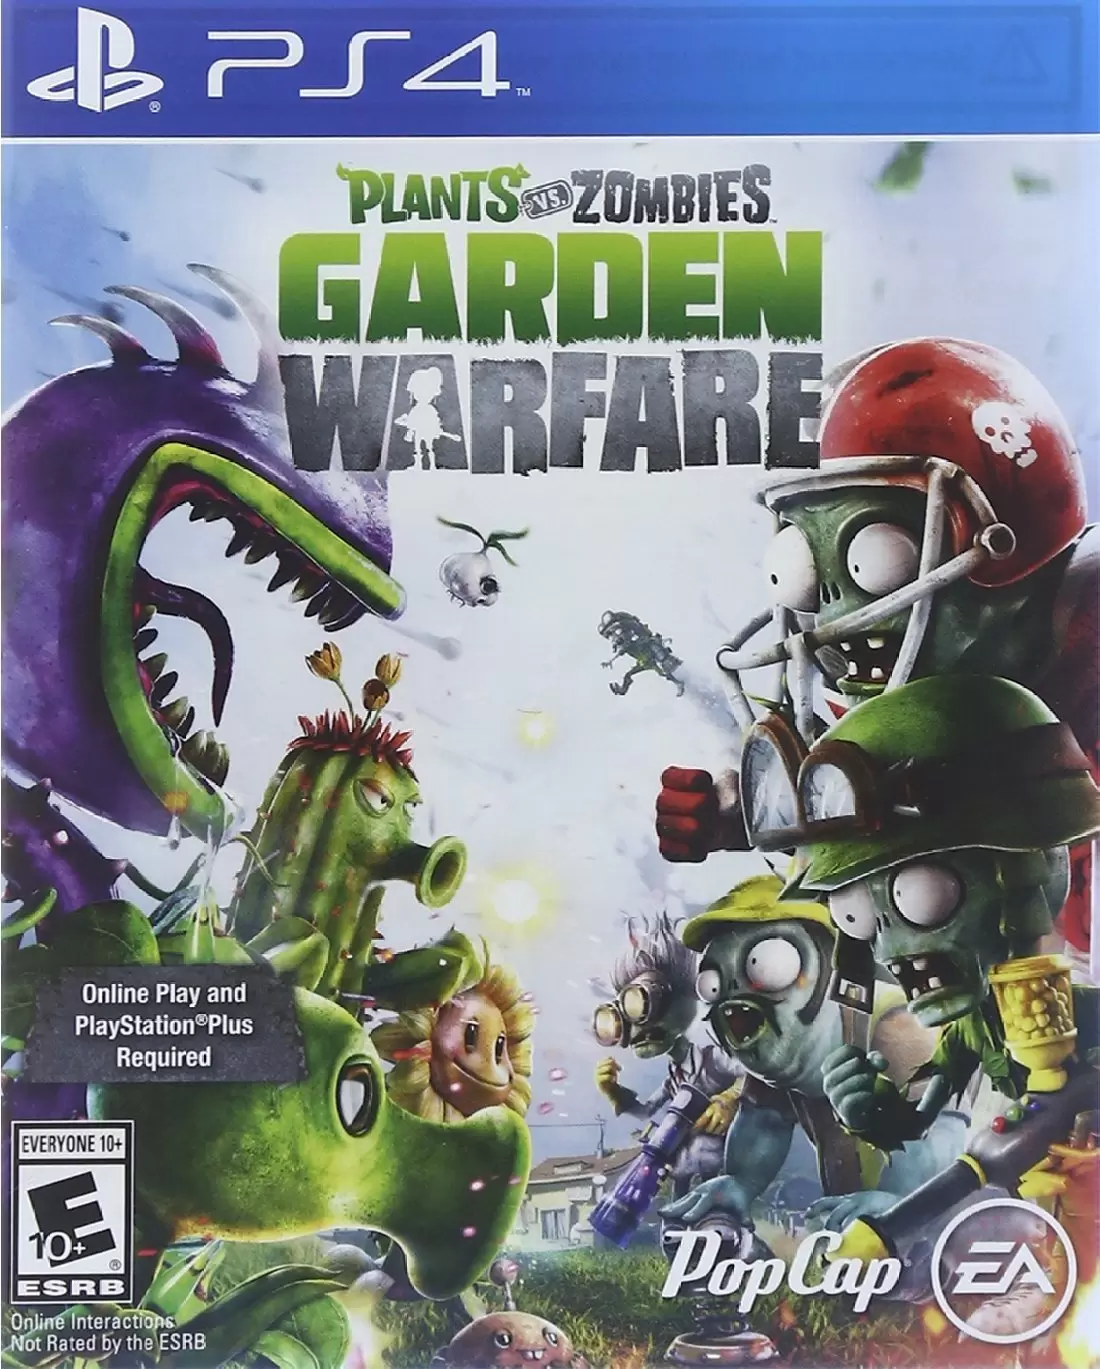 PS4 Games - Plants vs. Zombies: Garden Warfare